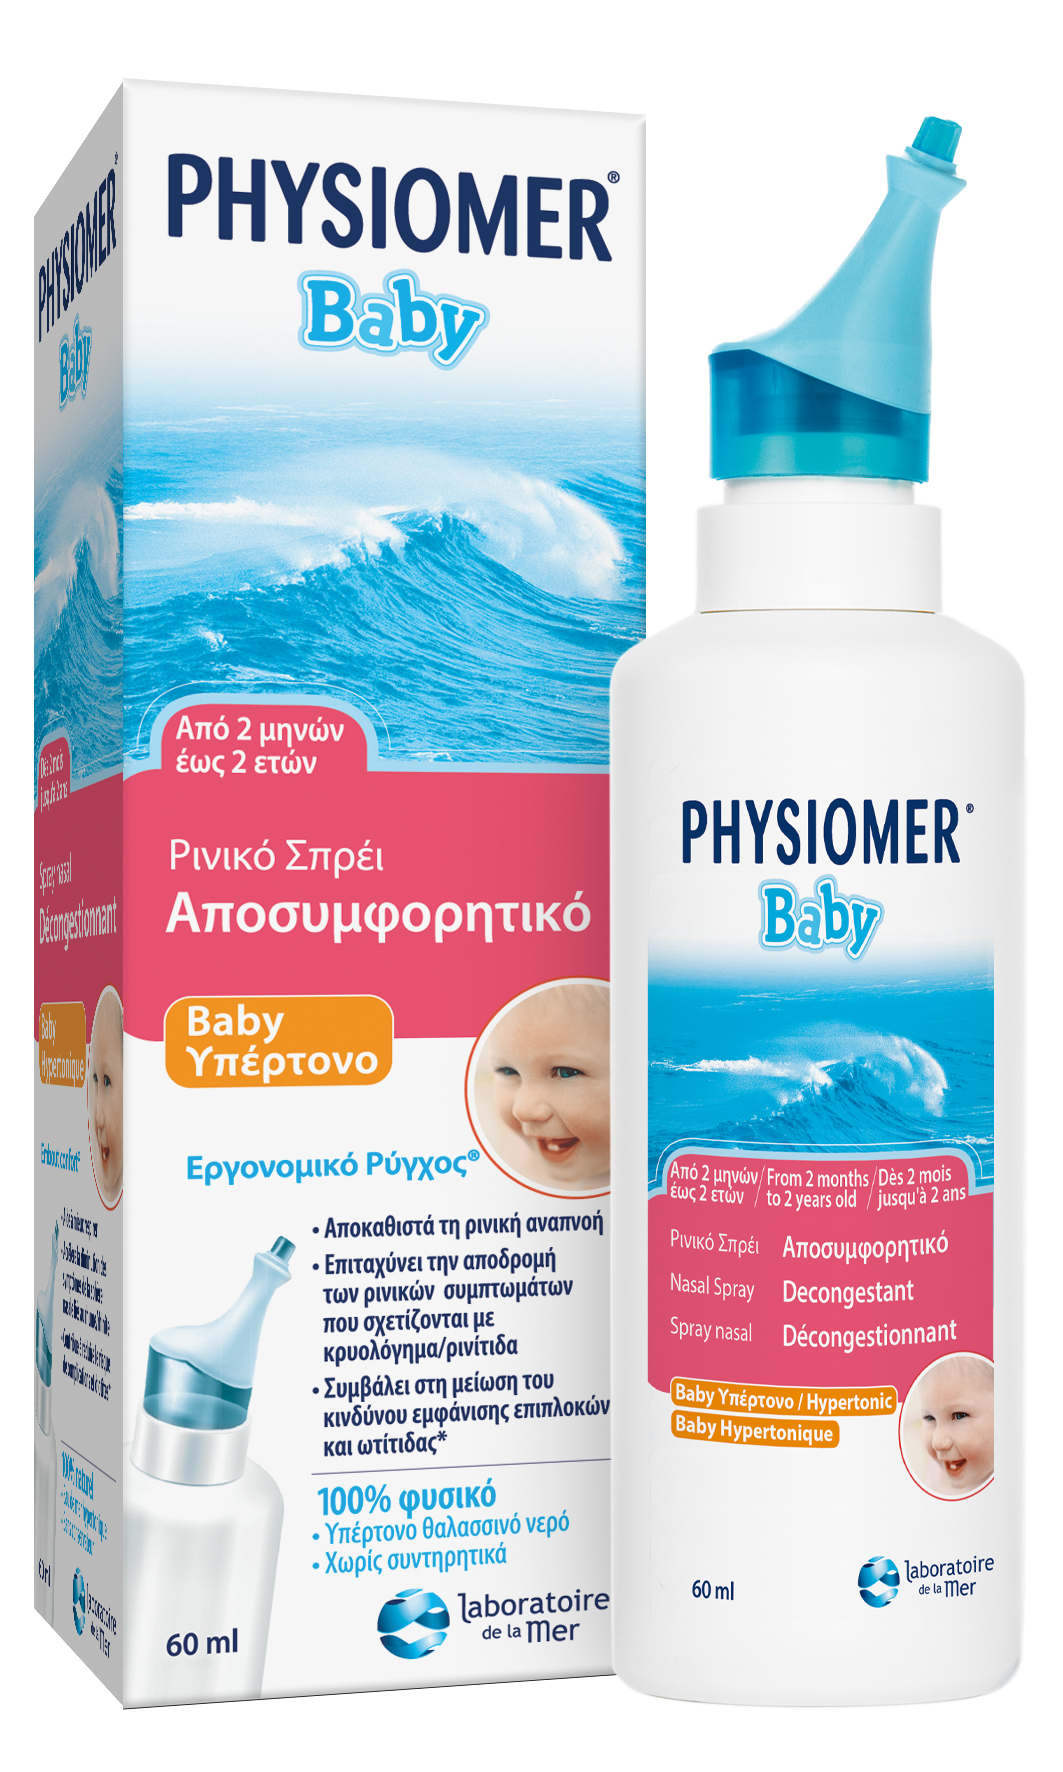 Physiomer Baby Spray Nasal Décongestionnant 60ml